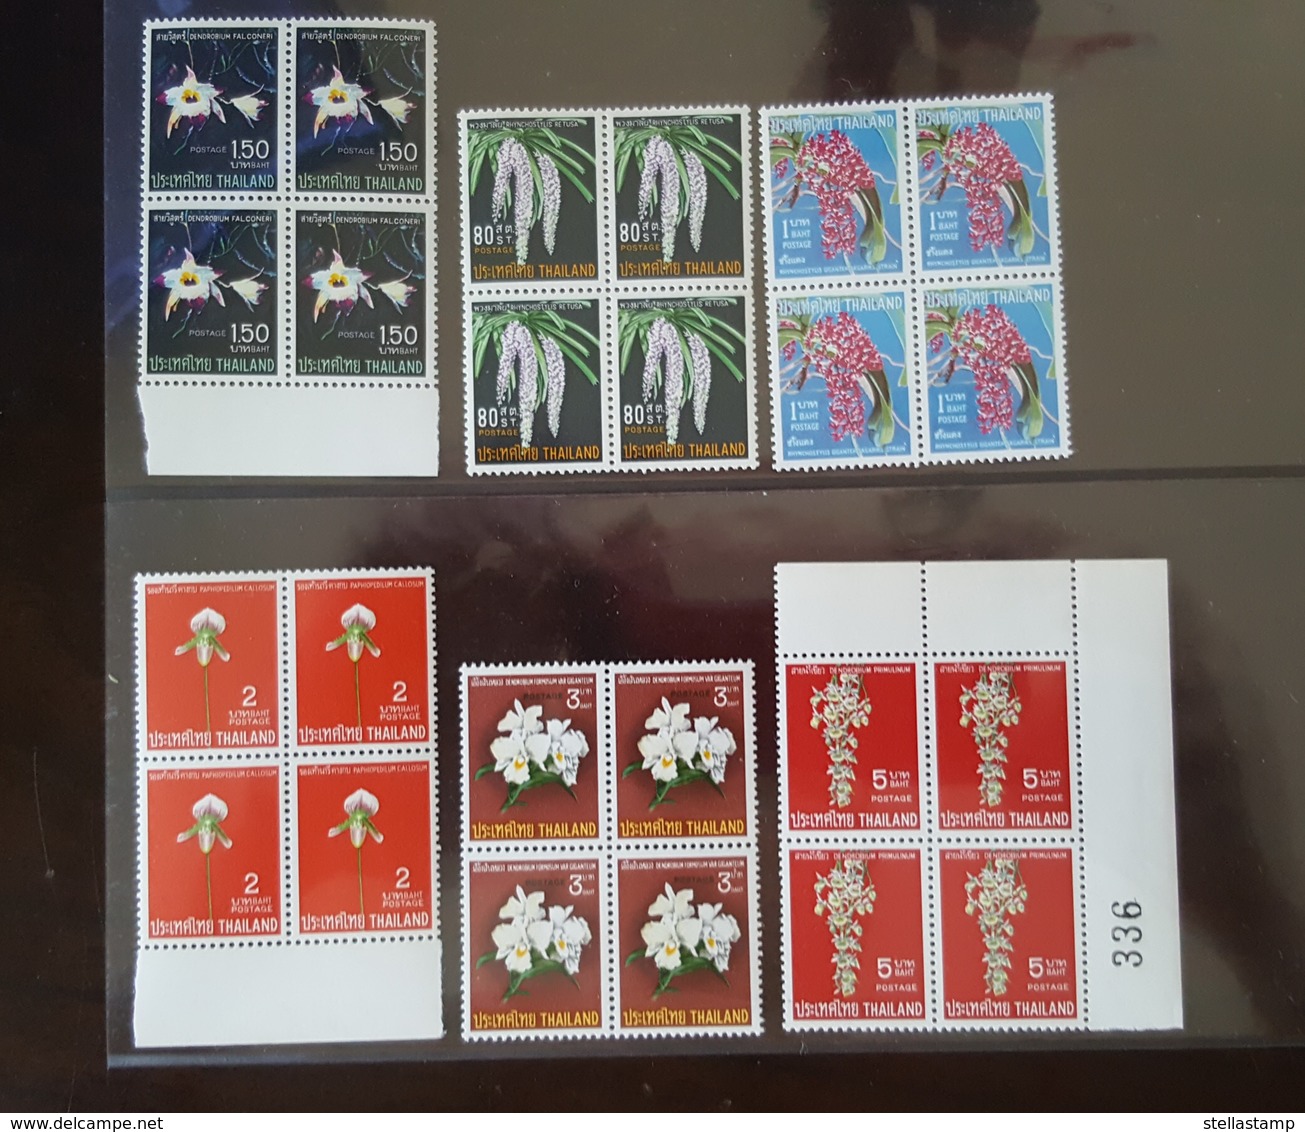 Thailand Stamp 1967 Thai Orchids 1st BLK4 (Missing 20-50 Satang) MNH OG - Thailand